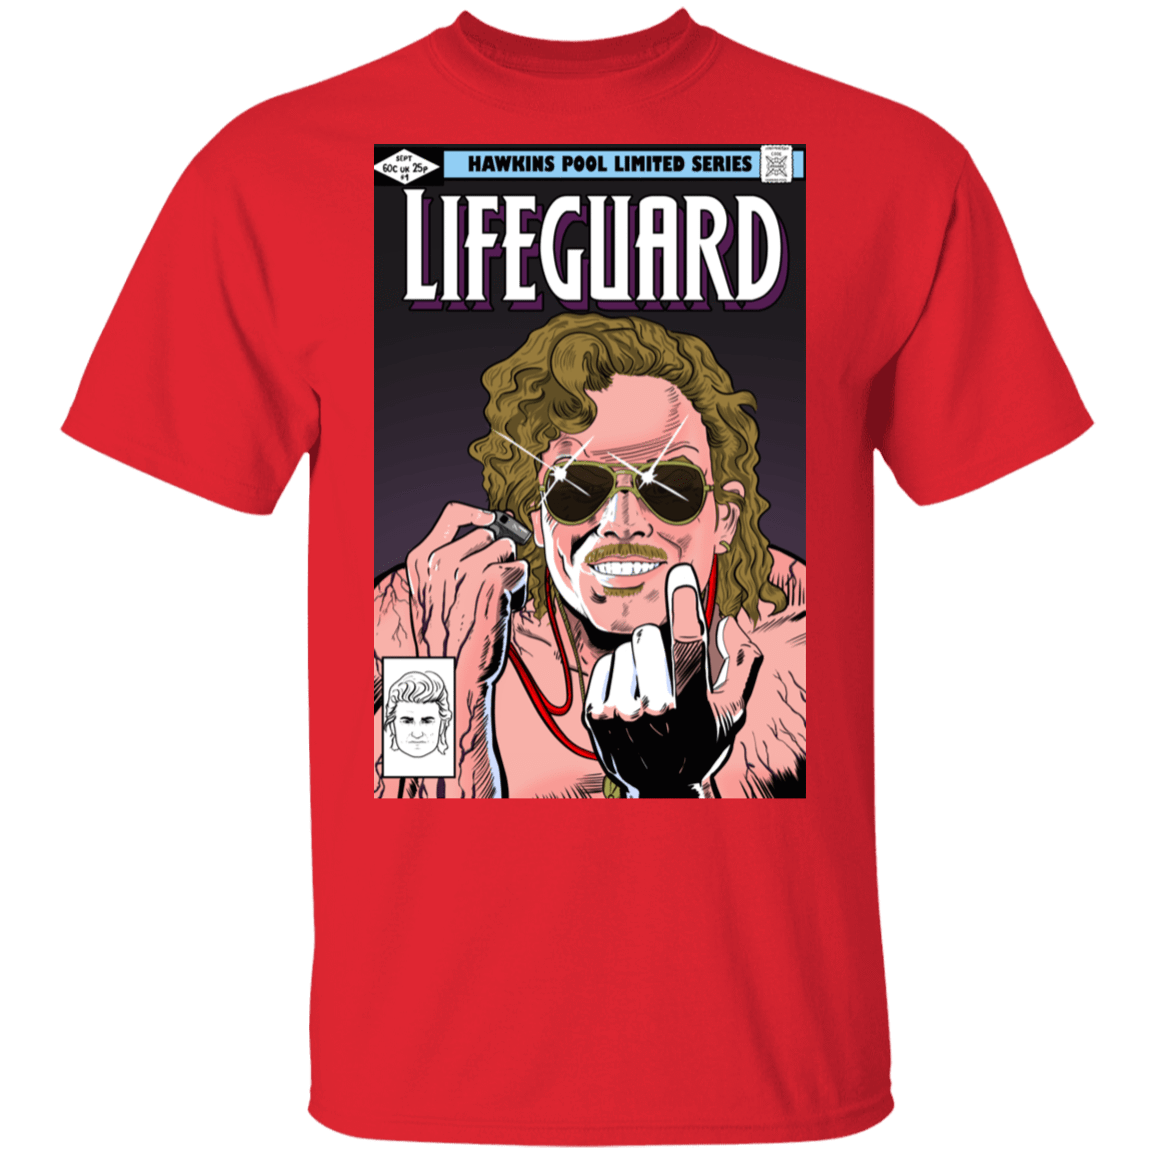 T-Shirts Red / S Dark Lifeguard T-Shirt